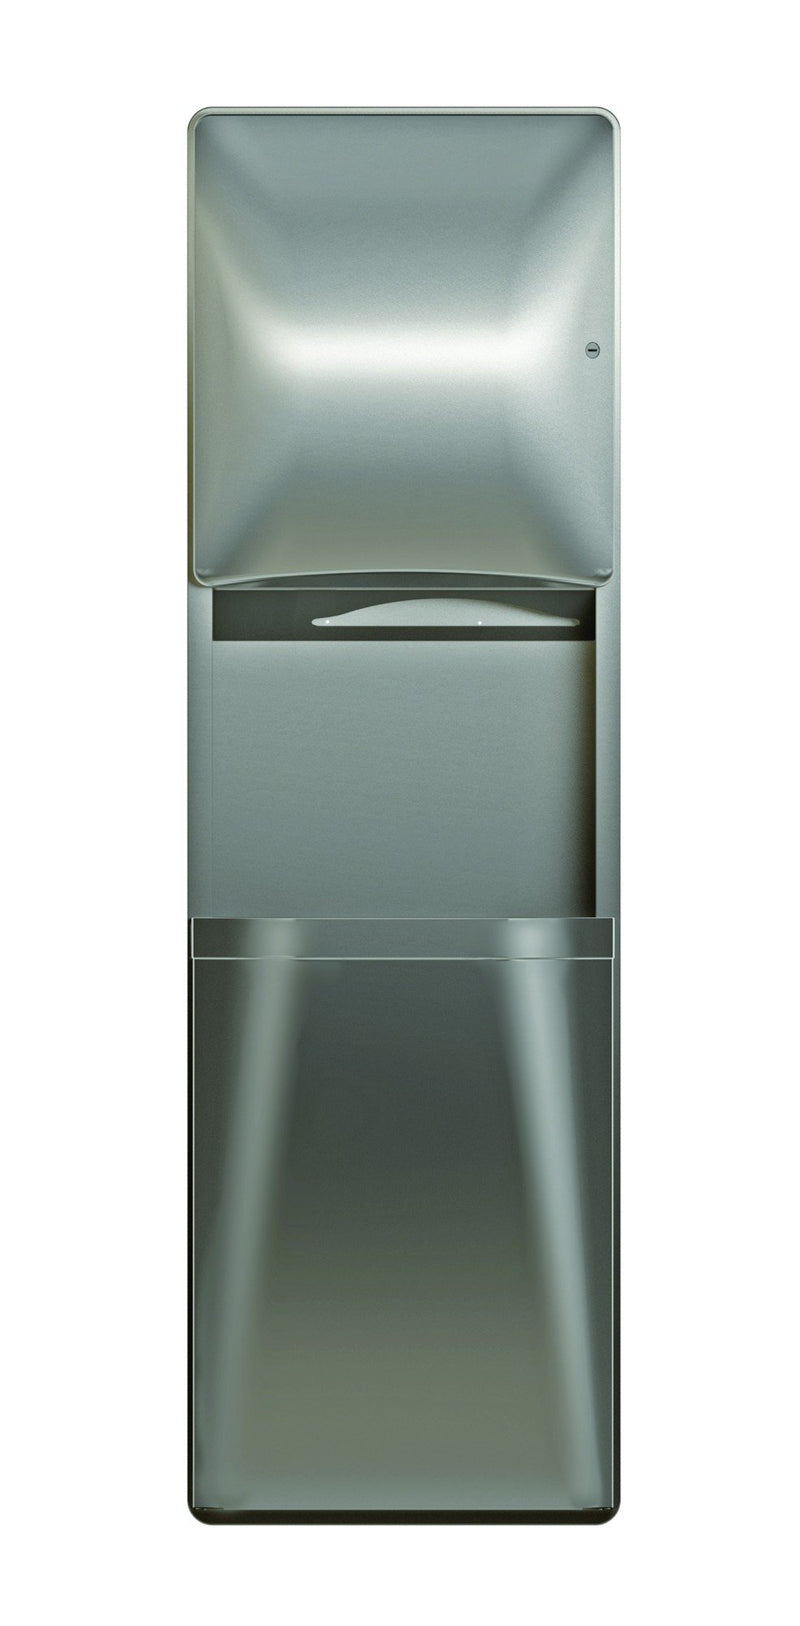 Bradley 2A05-103600 - Diplomat Series Recessed Paper Towel Dispenser/Waste Receptacle, 18 Gal